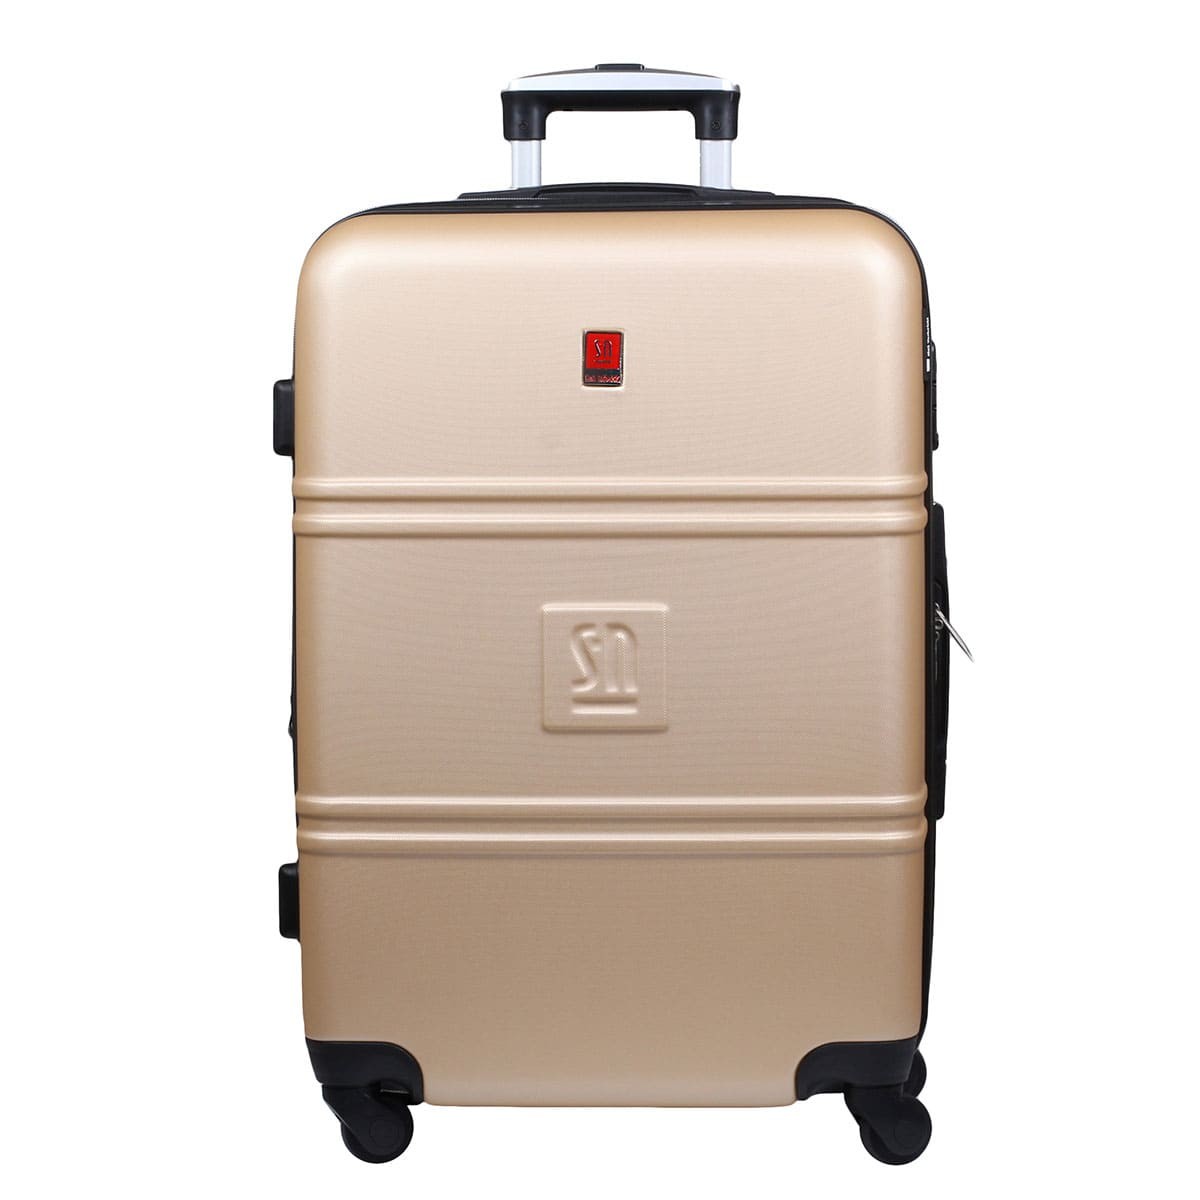 zlota-walizka-podrozna-srednia-na-kolkach-Art-Class-04-0411O-25.jpg